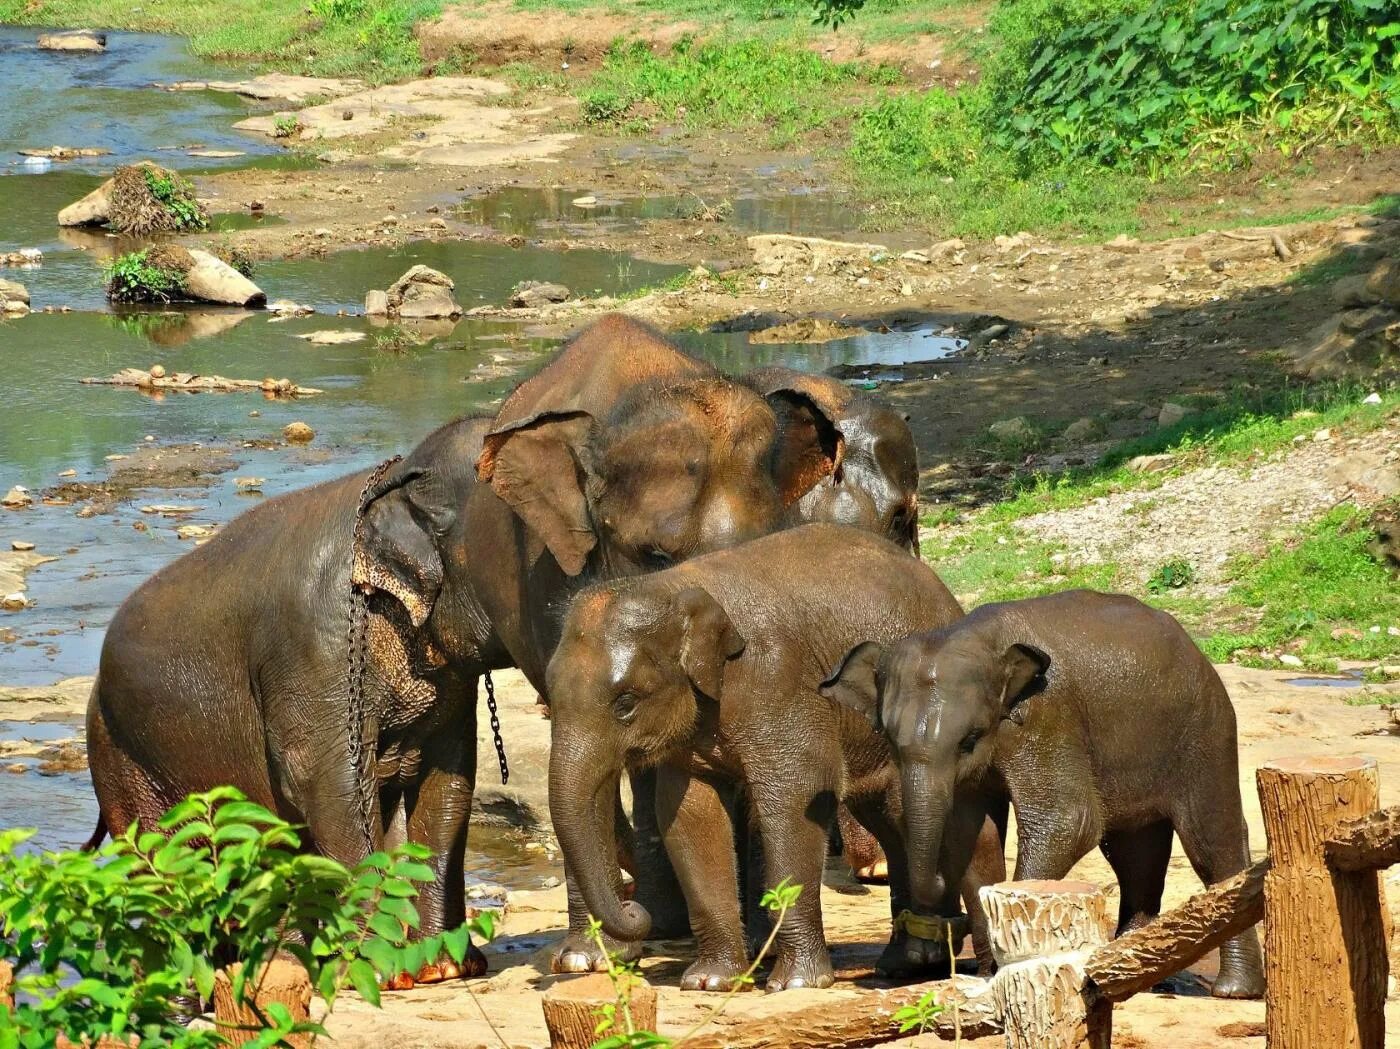 Слоновий питомник Шри Ланка Пиннавела. Слоновий питомник на Шри Ланке. Пинавелла питомник слонов. Пиннавела шри ланка